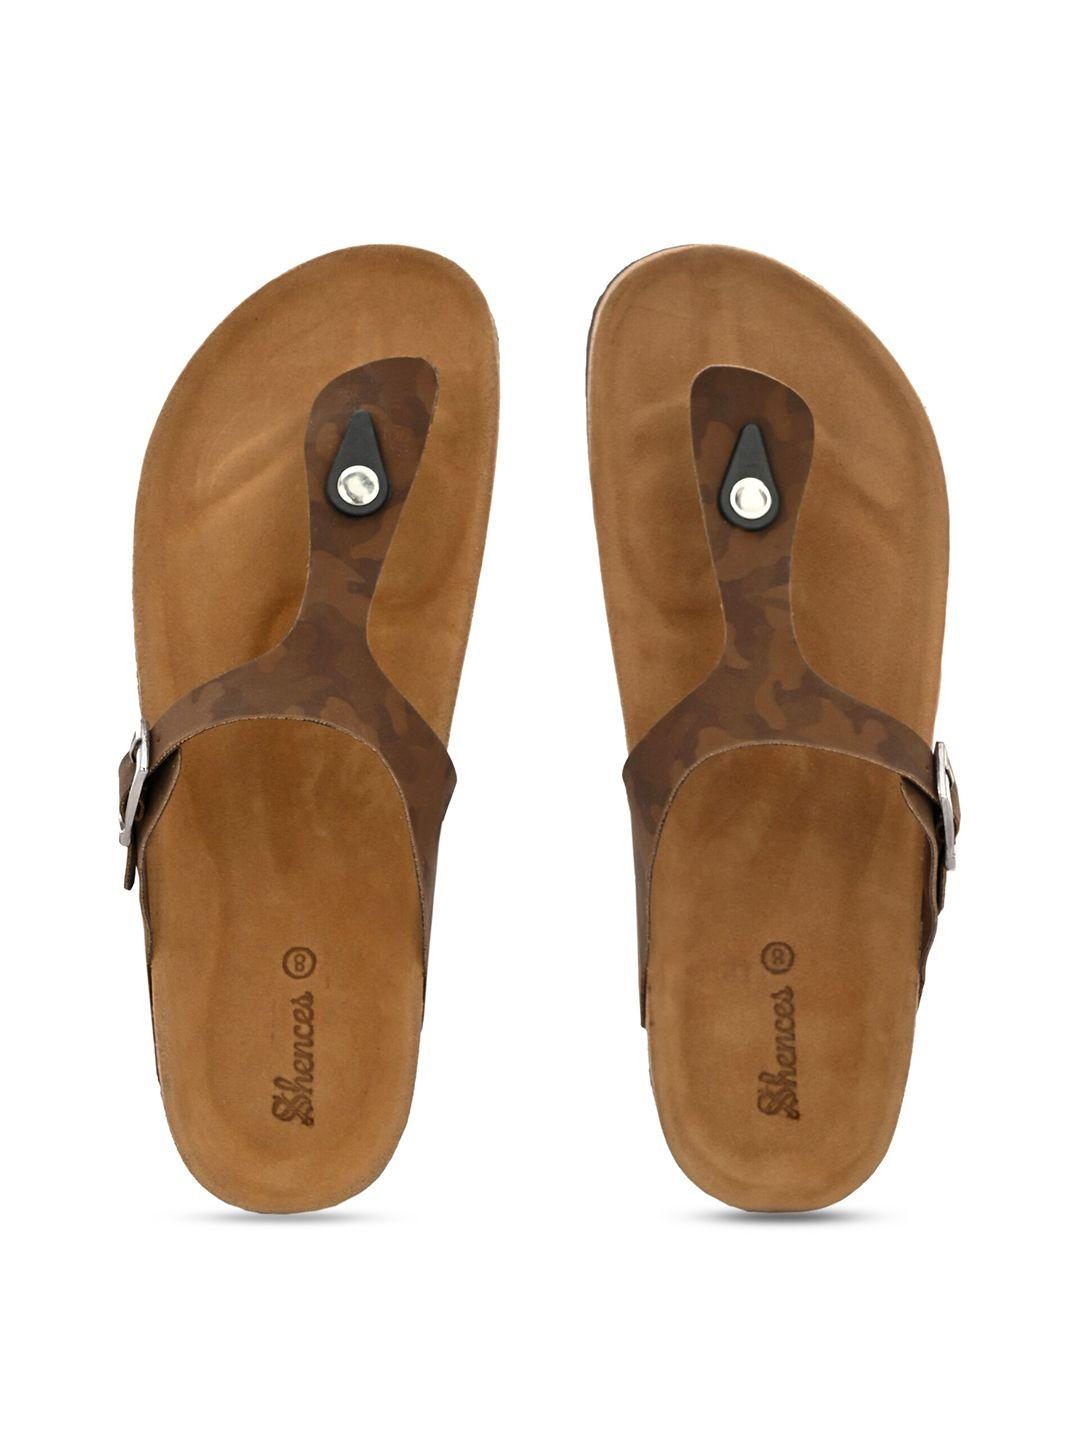 shences men shences cork  printed open toe comfort sandals with buckle detail